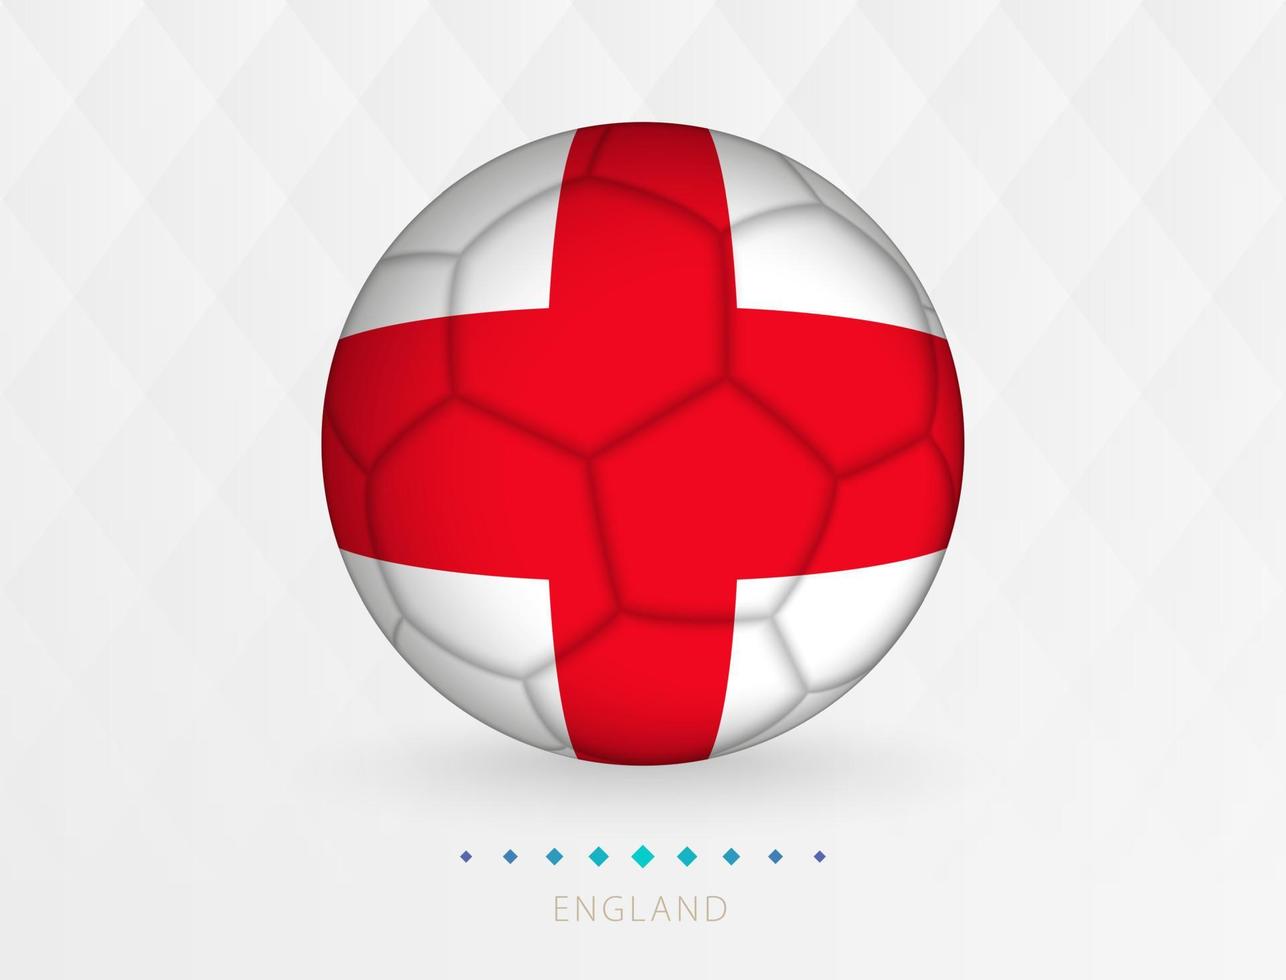 Football ball with England flag pattern, soccer ball with flag of England national team. vector